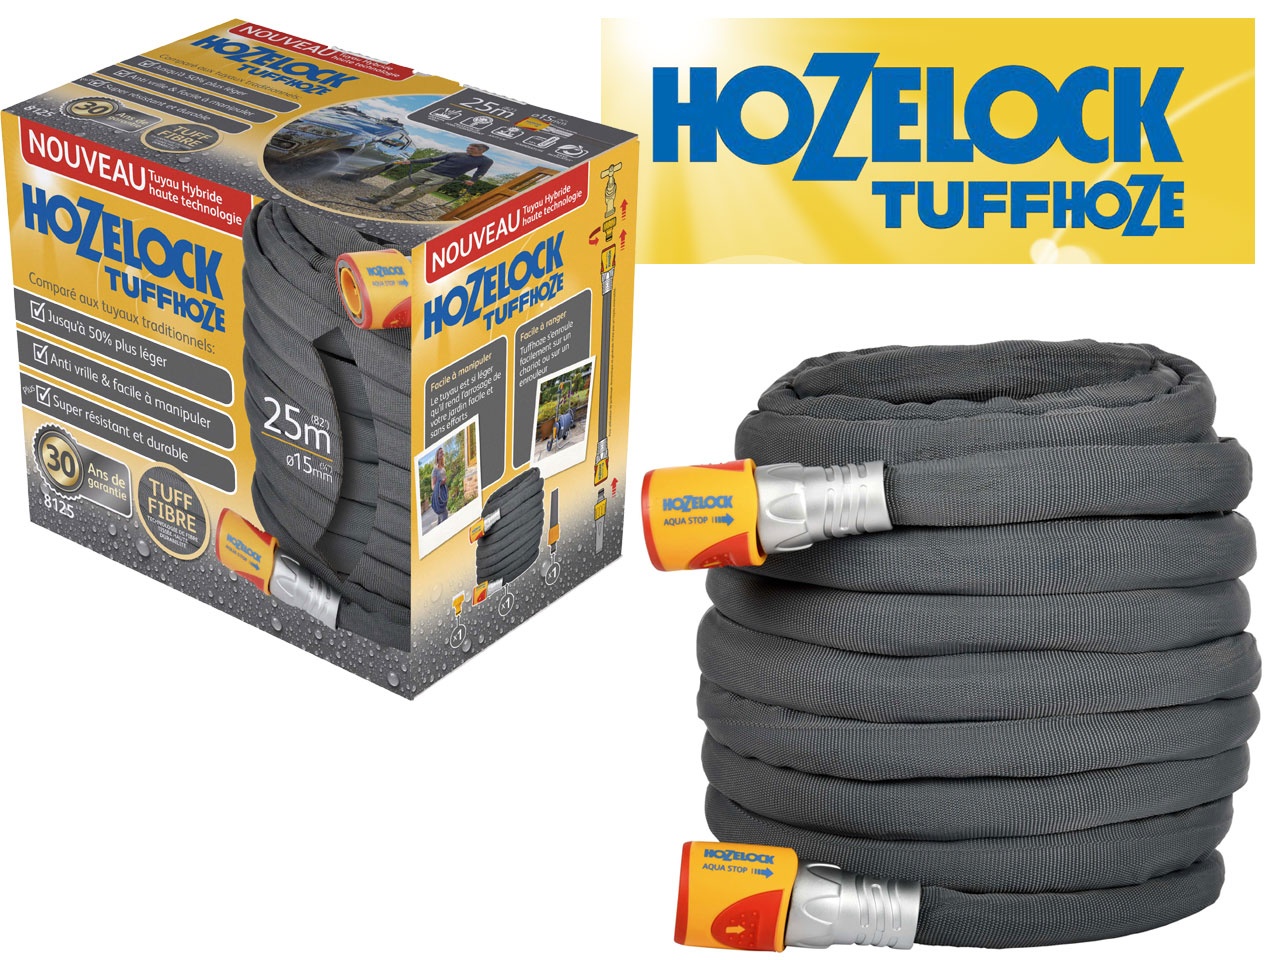 Tuffhoze Hozelock : la combinaison de 2 technologies pour un tuyau